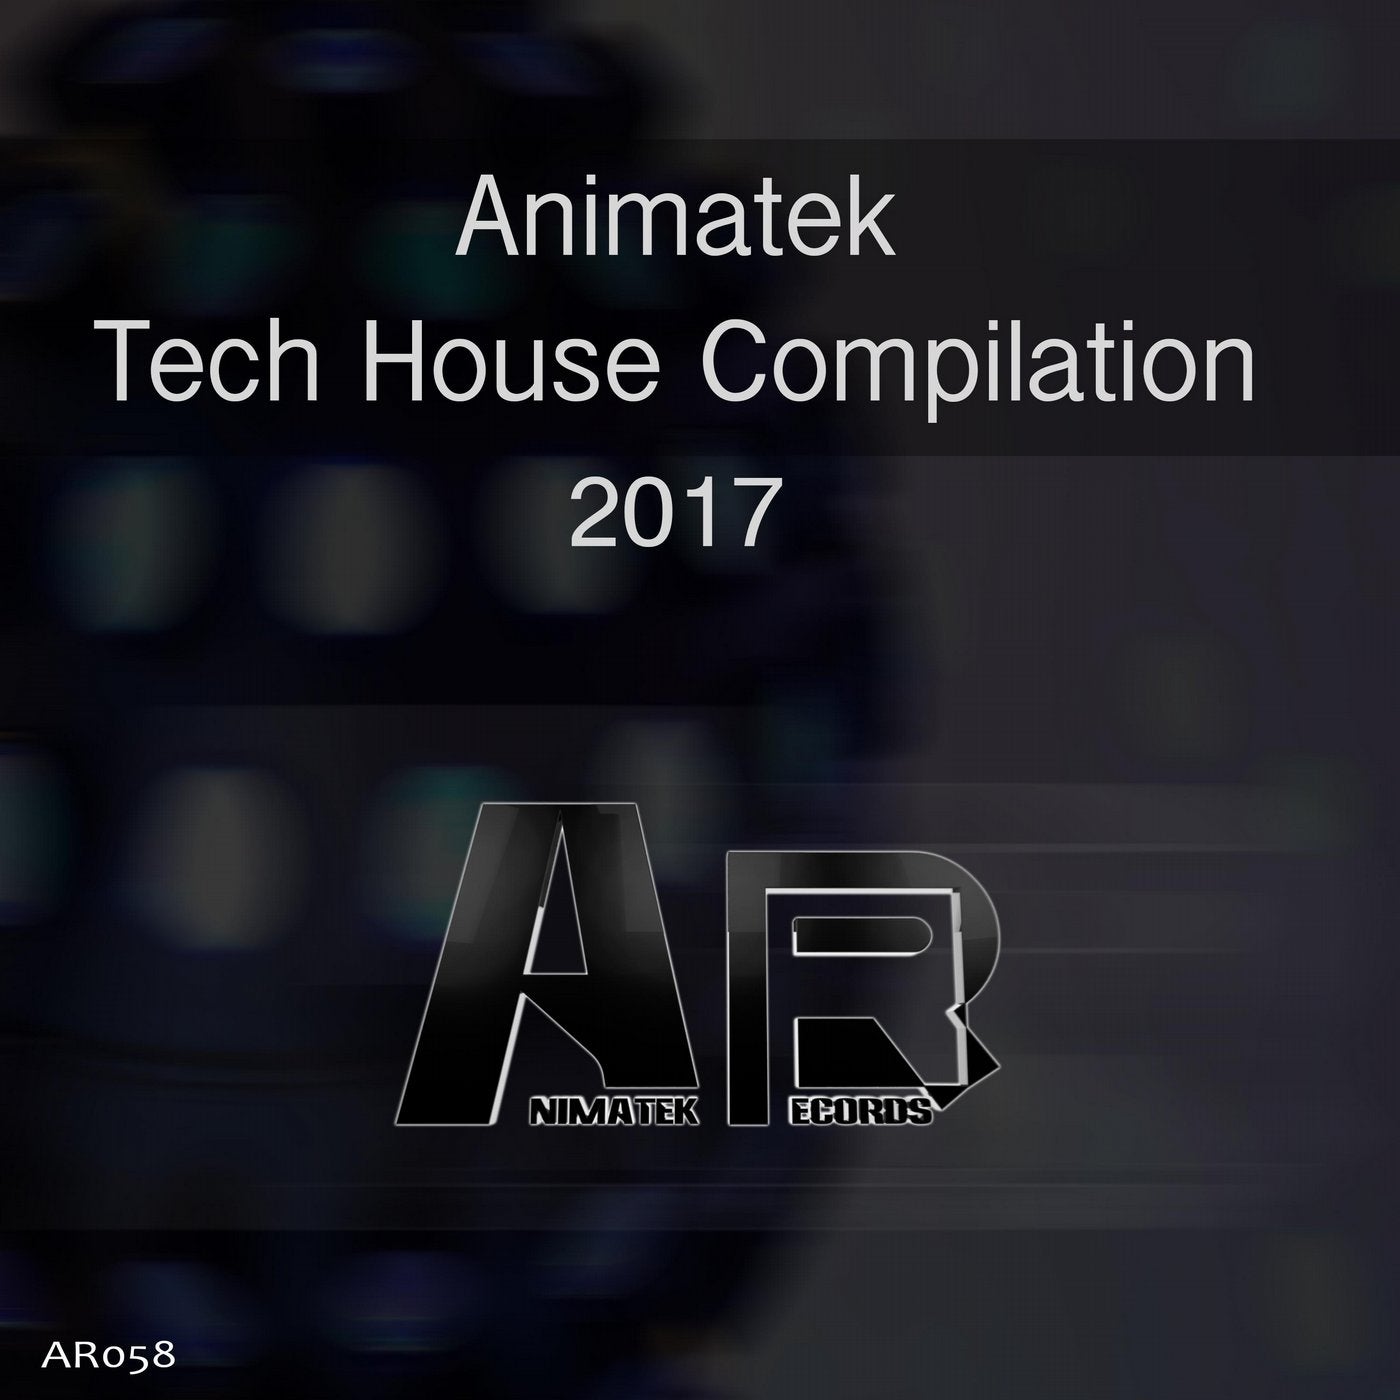 Animatek Tech Compilation 2017